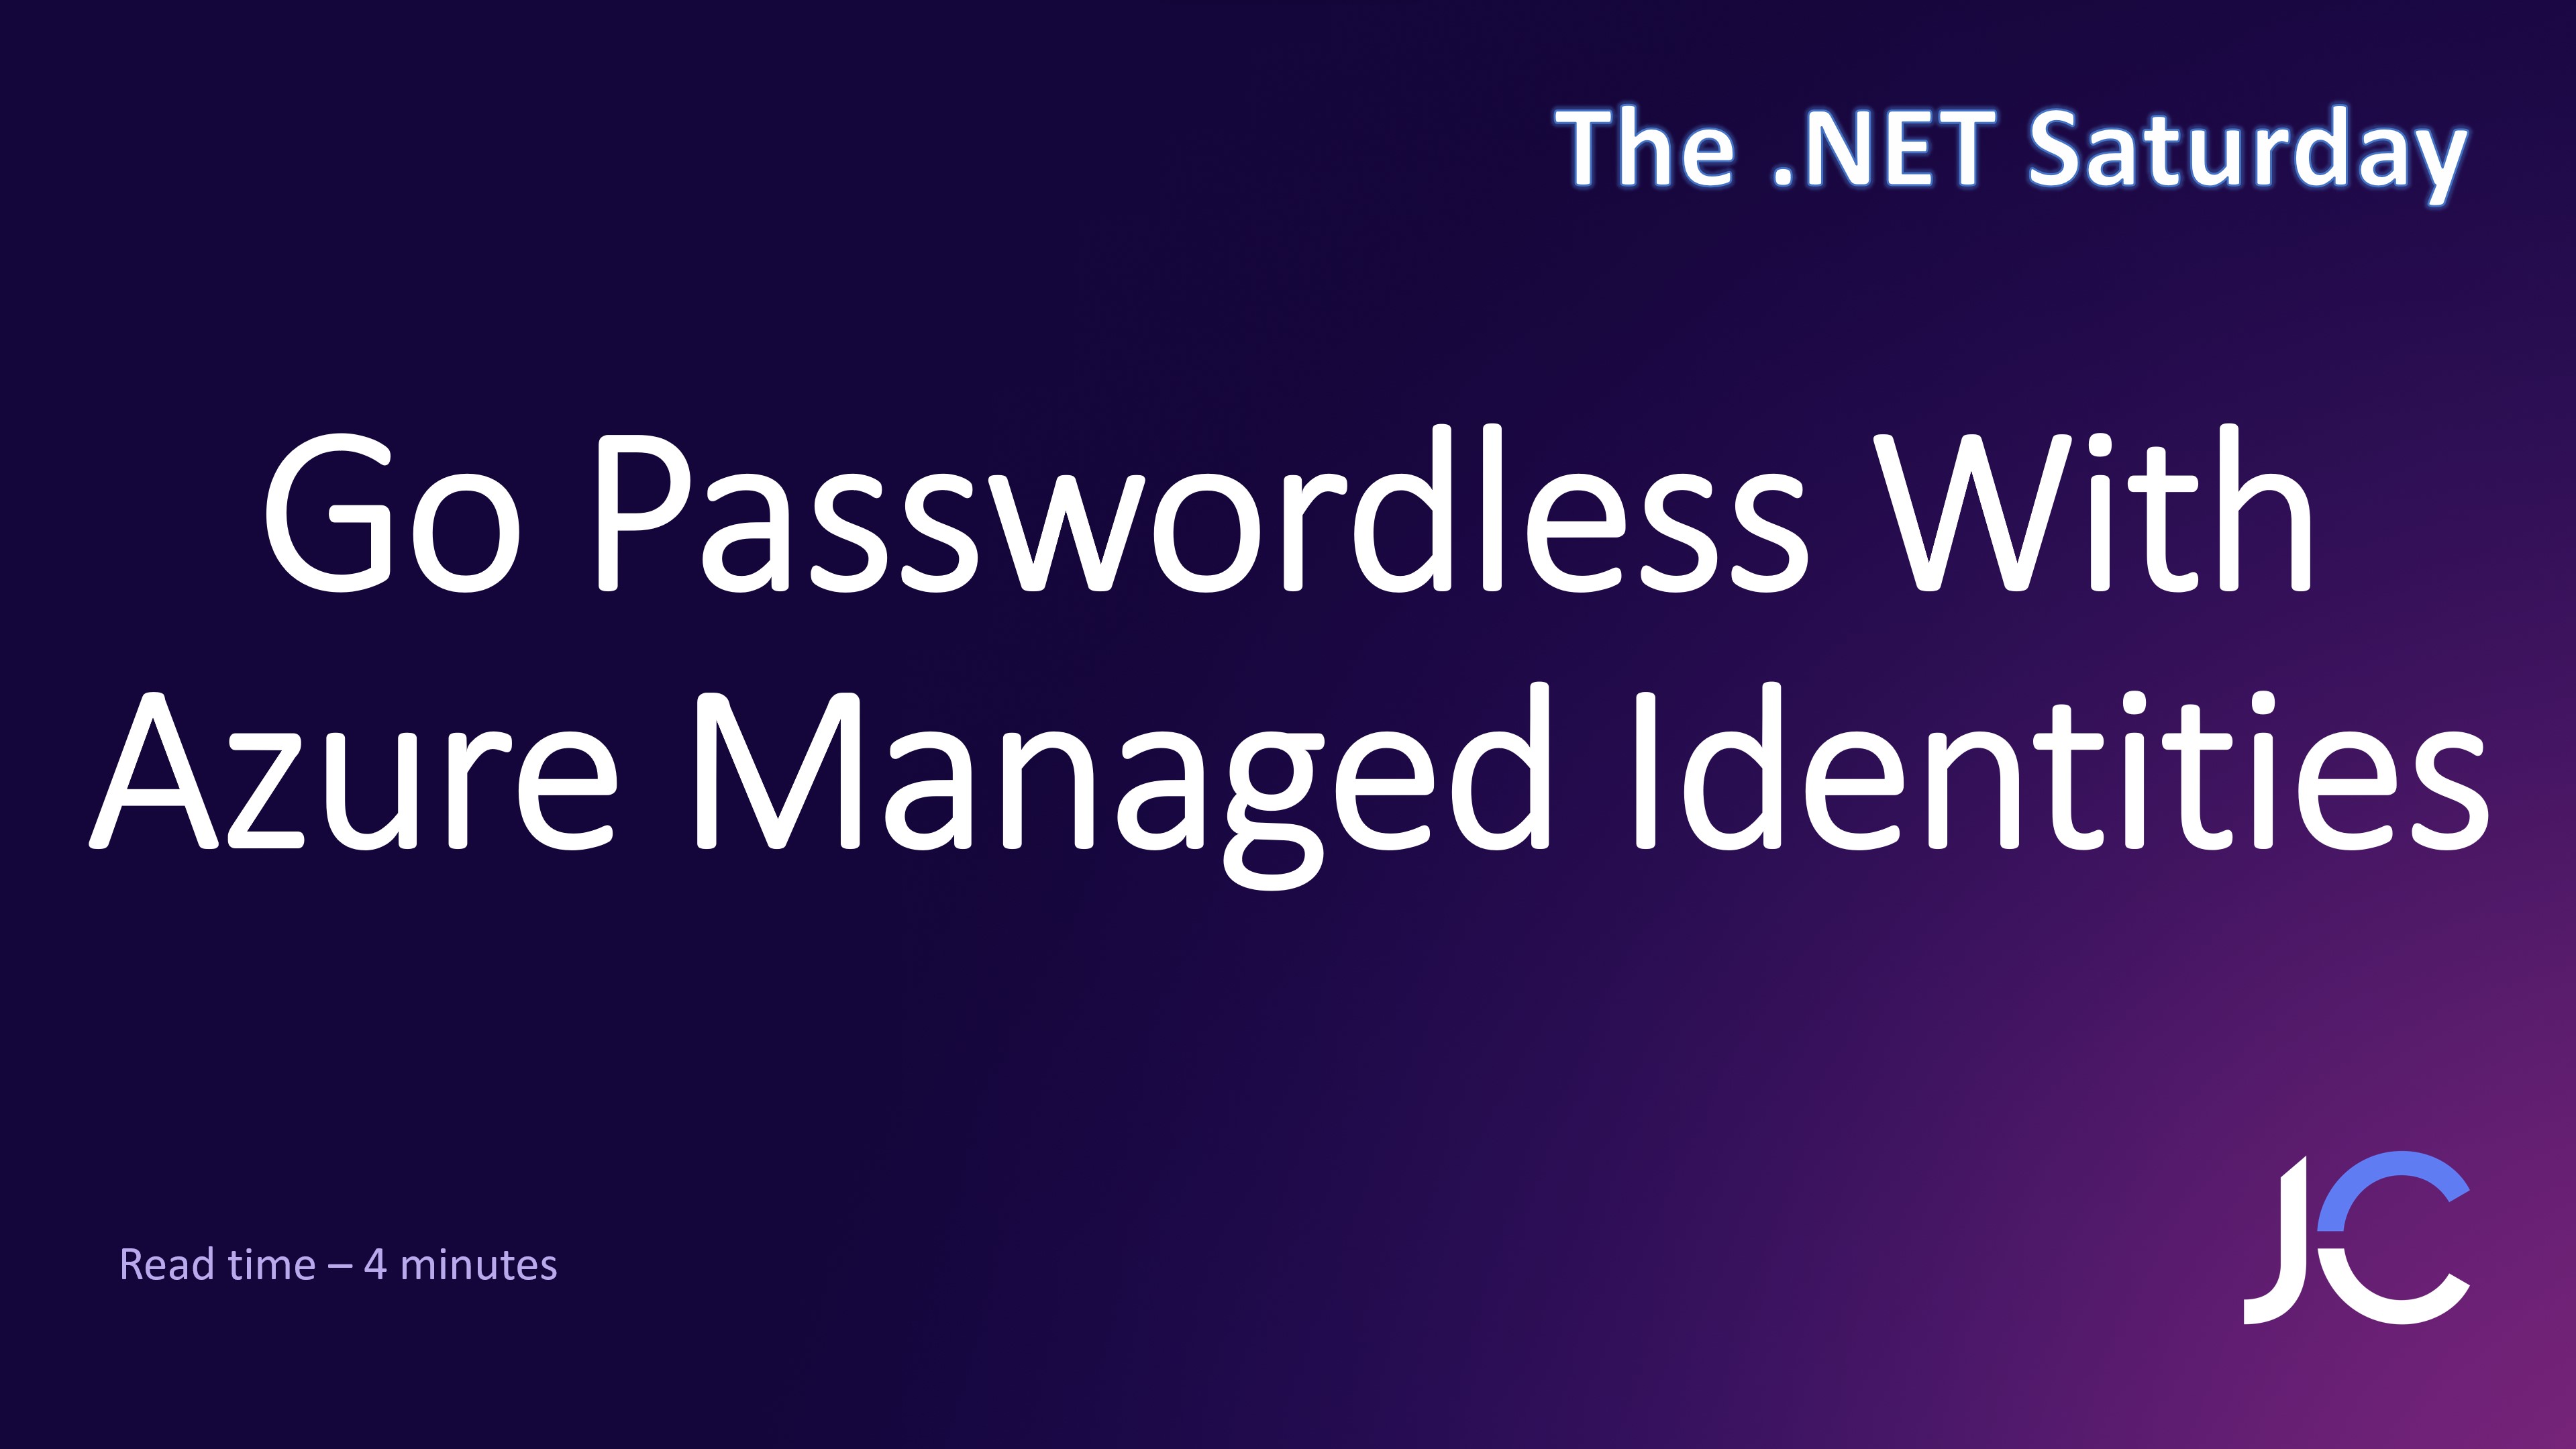 Go Passwordless With Azure Managed Identities